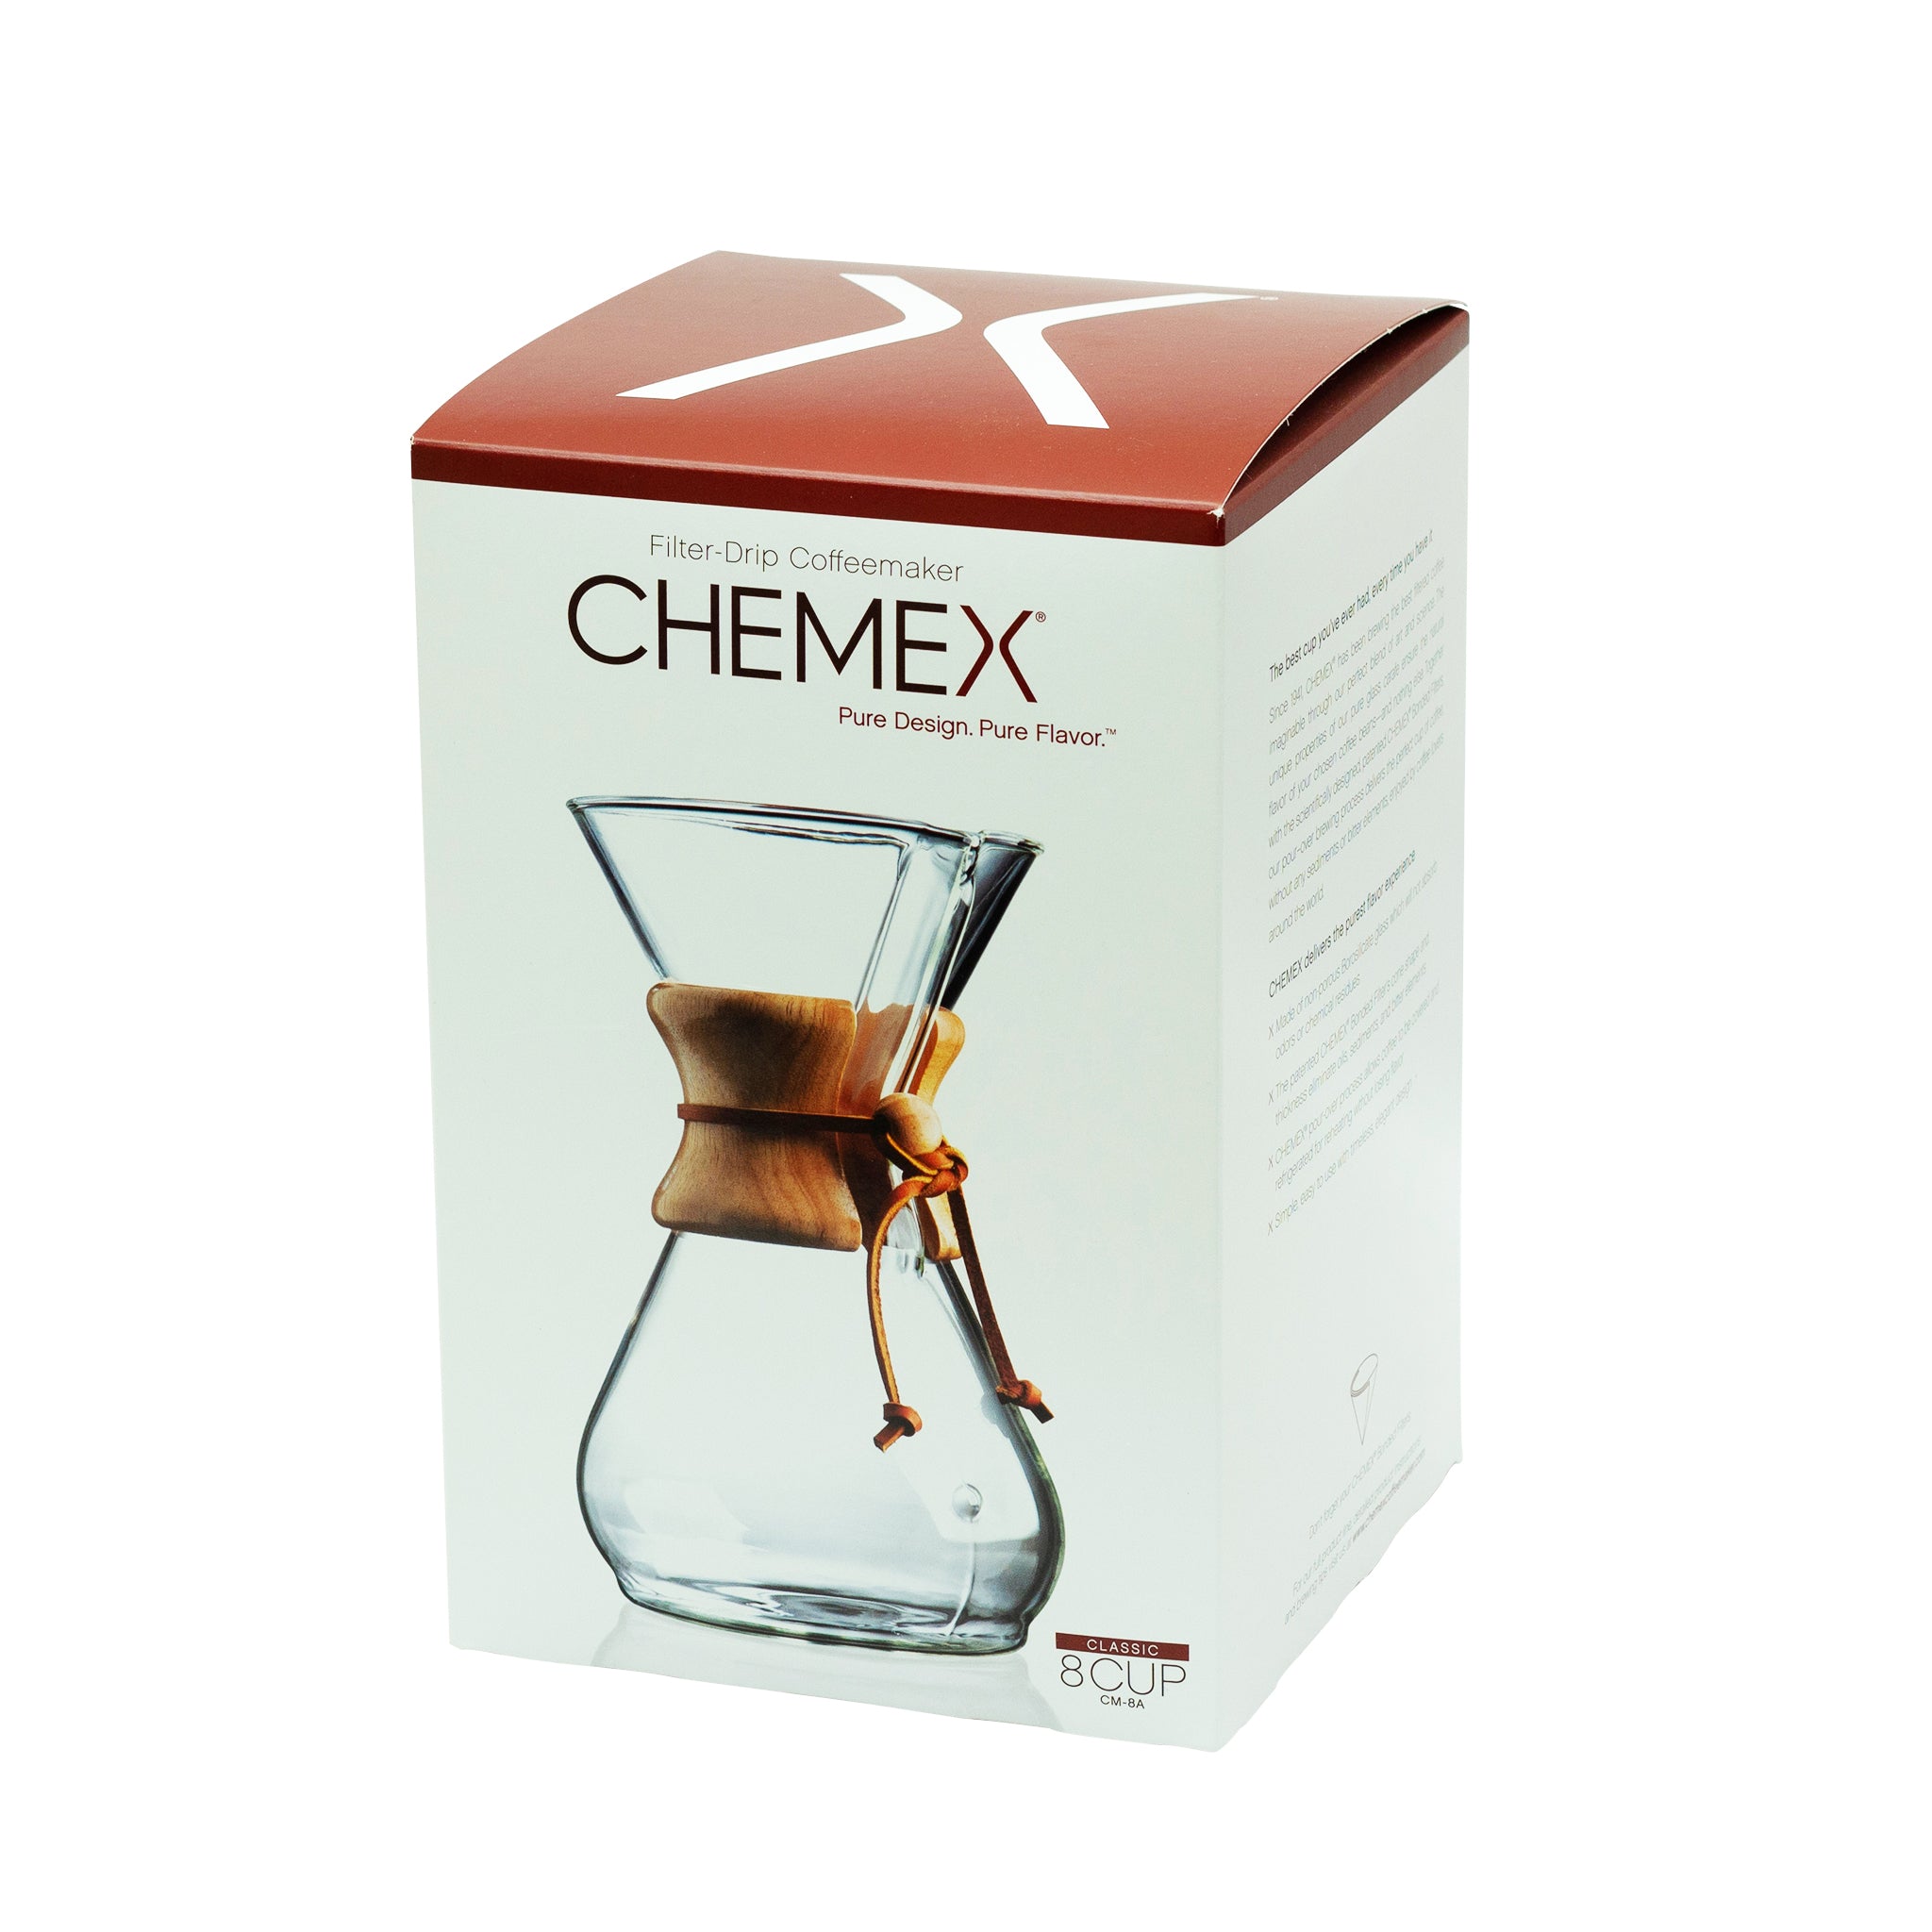 CHEMEX COFFEE MAKER 8 CUP